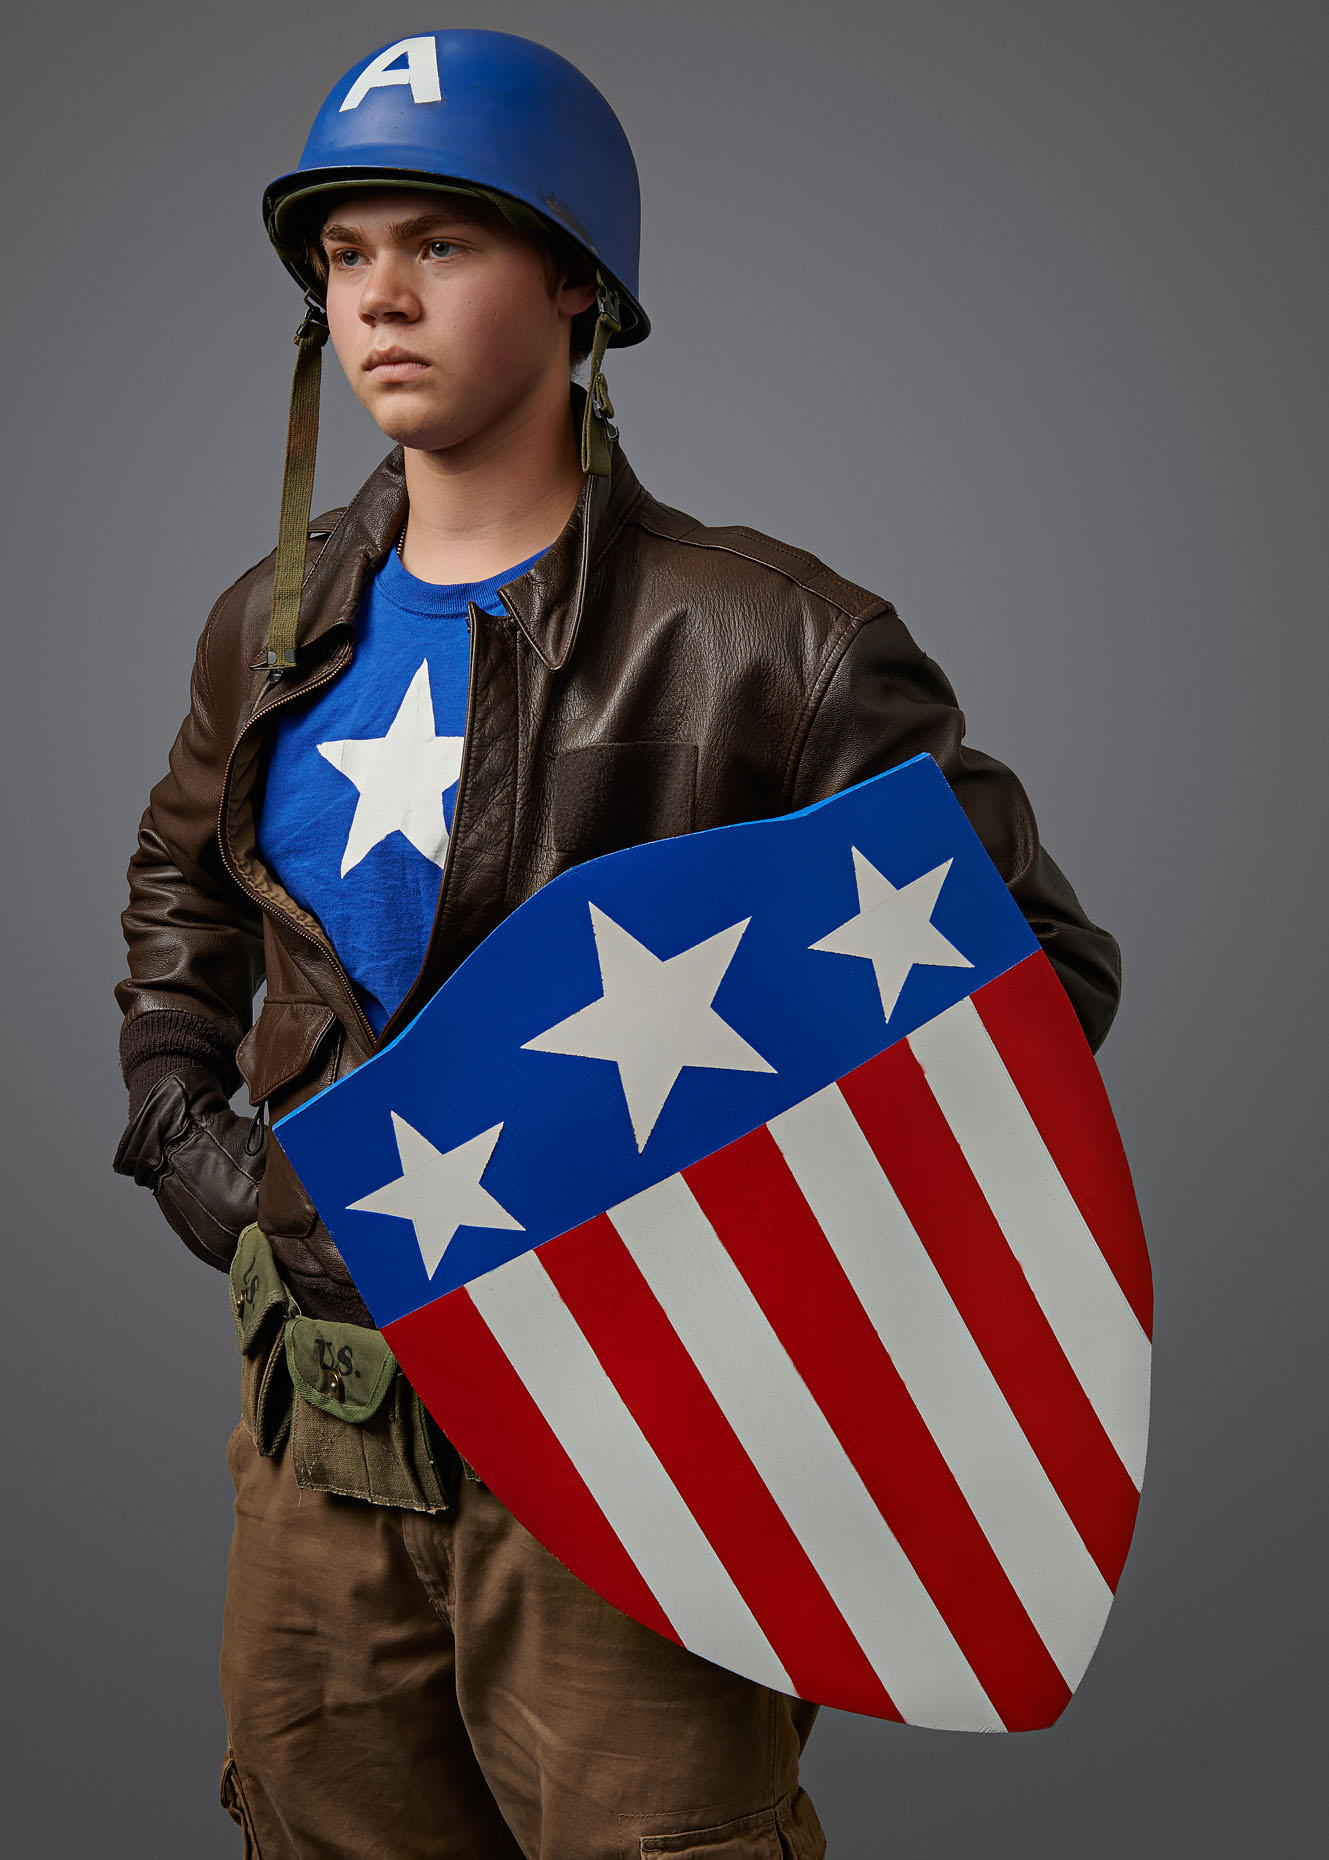 Retro Captain America Cosplay Portrait